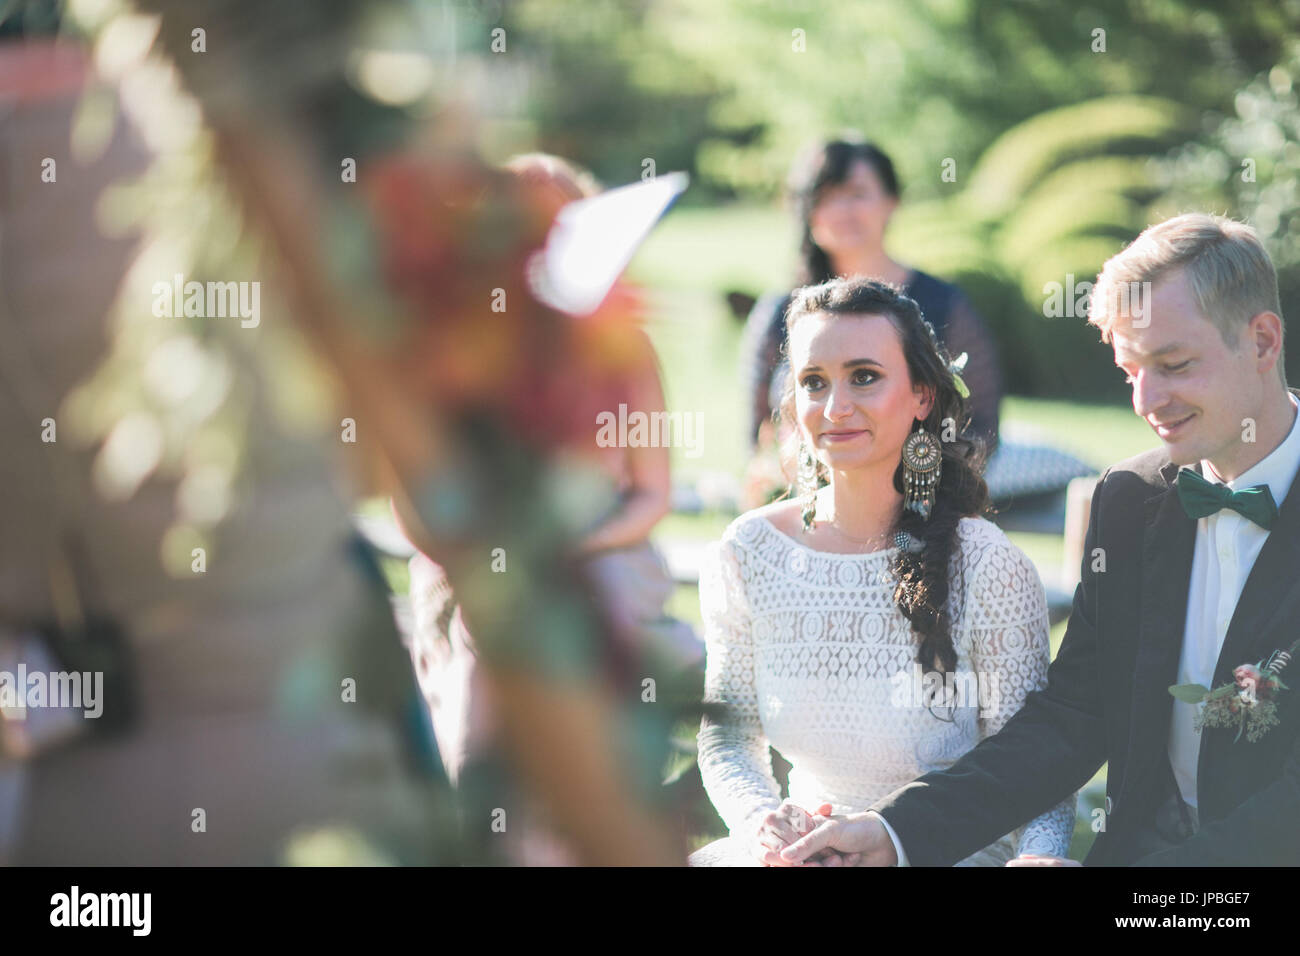 Alternate bridal couple at wedding ceremony outdoors, portrait Stock Photo